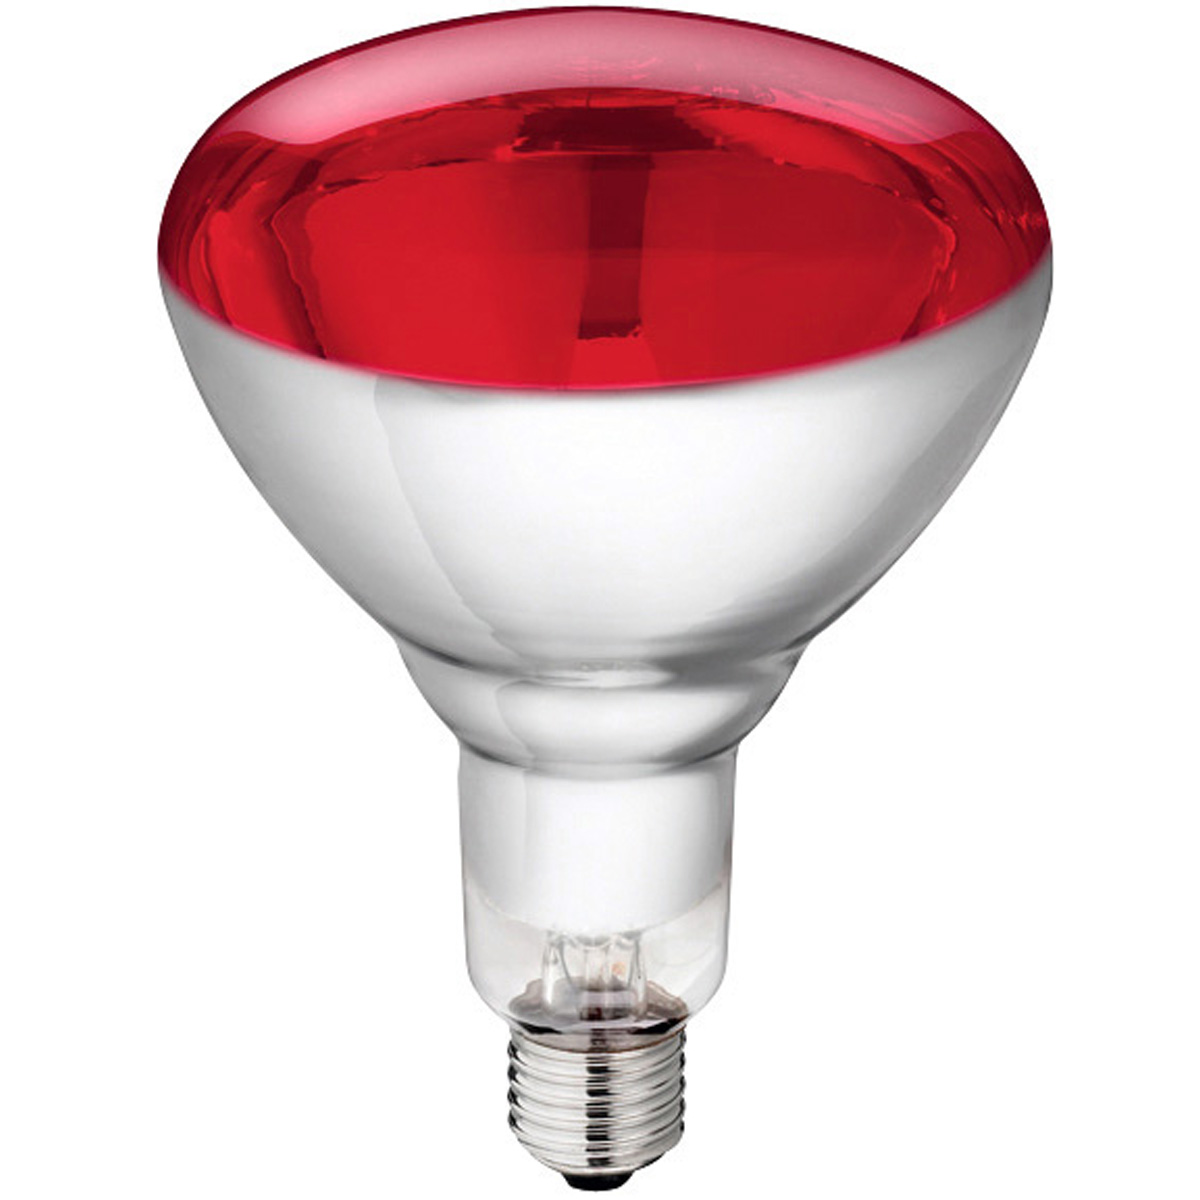 Lampe Philips en verre dur  rouge 150 W